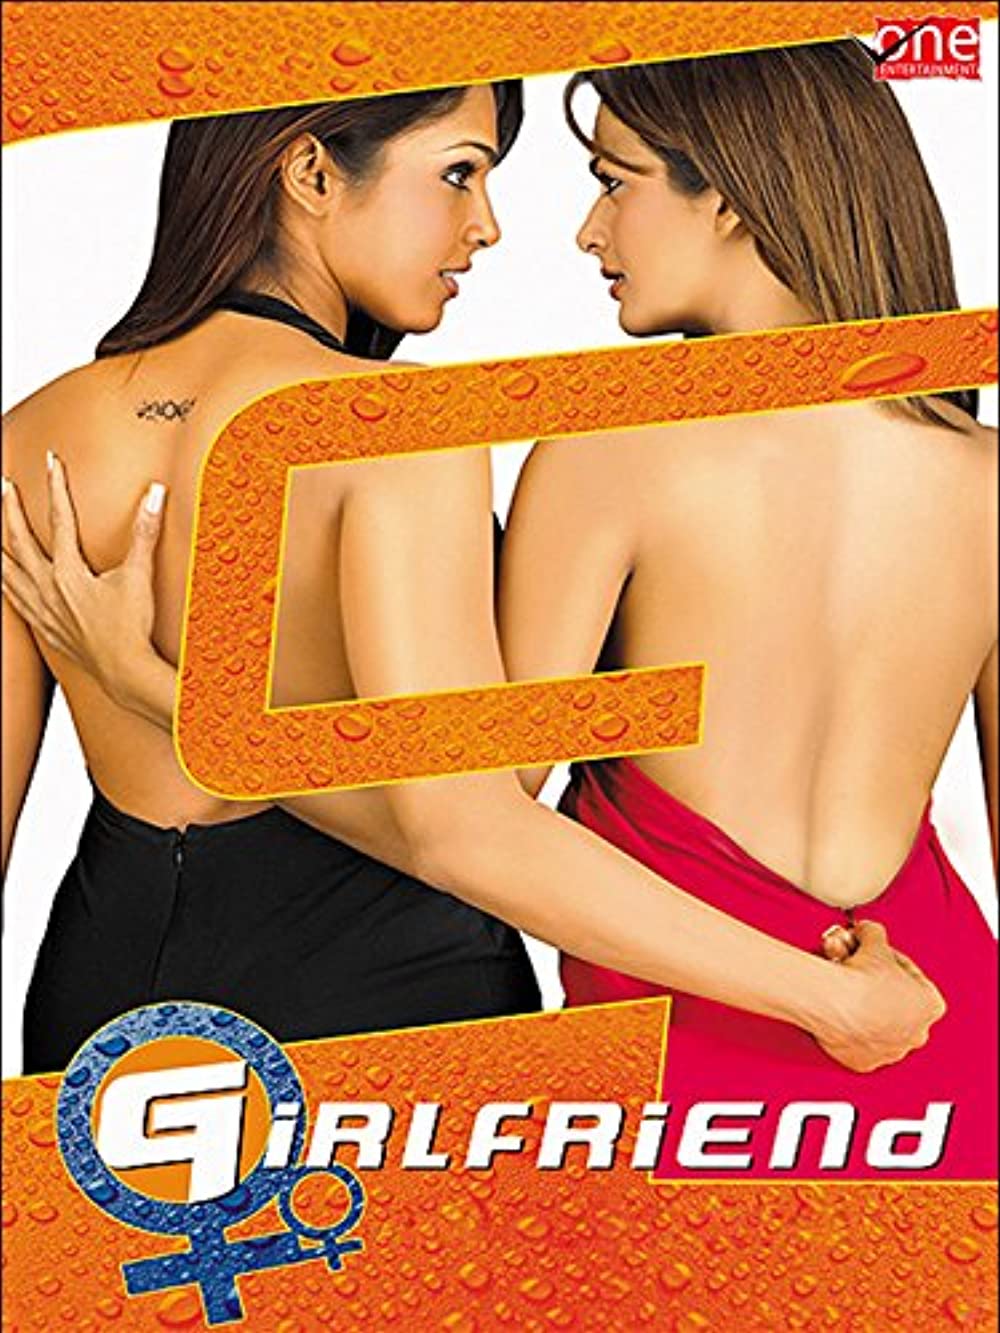 amrita isha backless girlfriend bold controversial bollywood movie poster